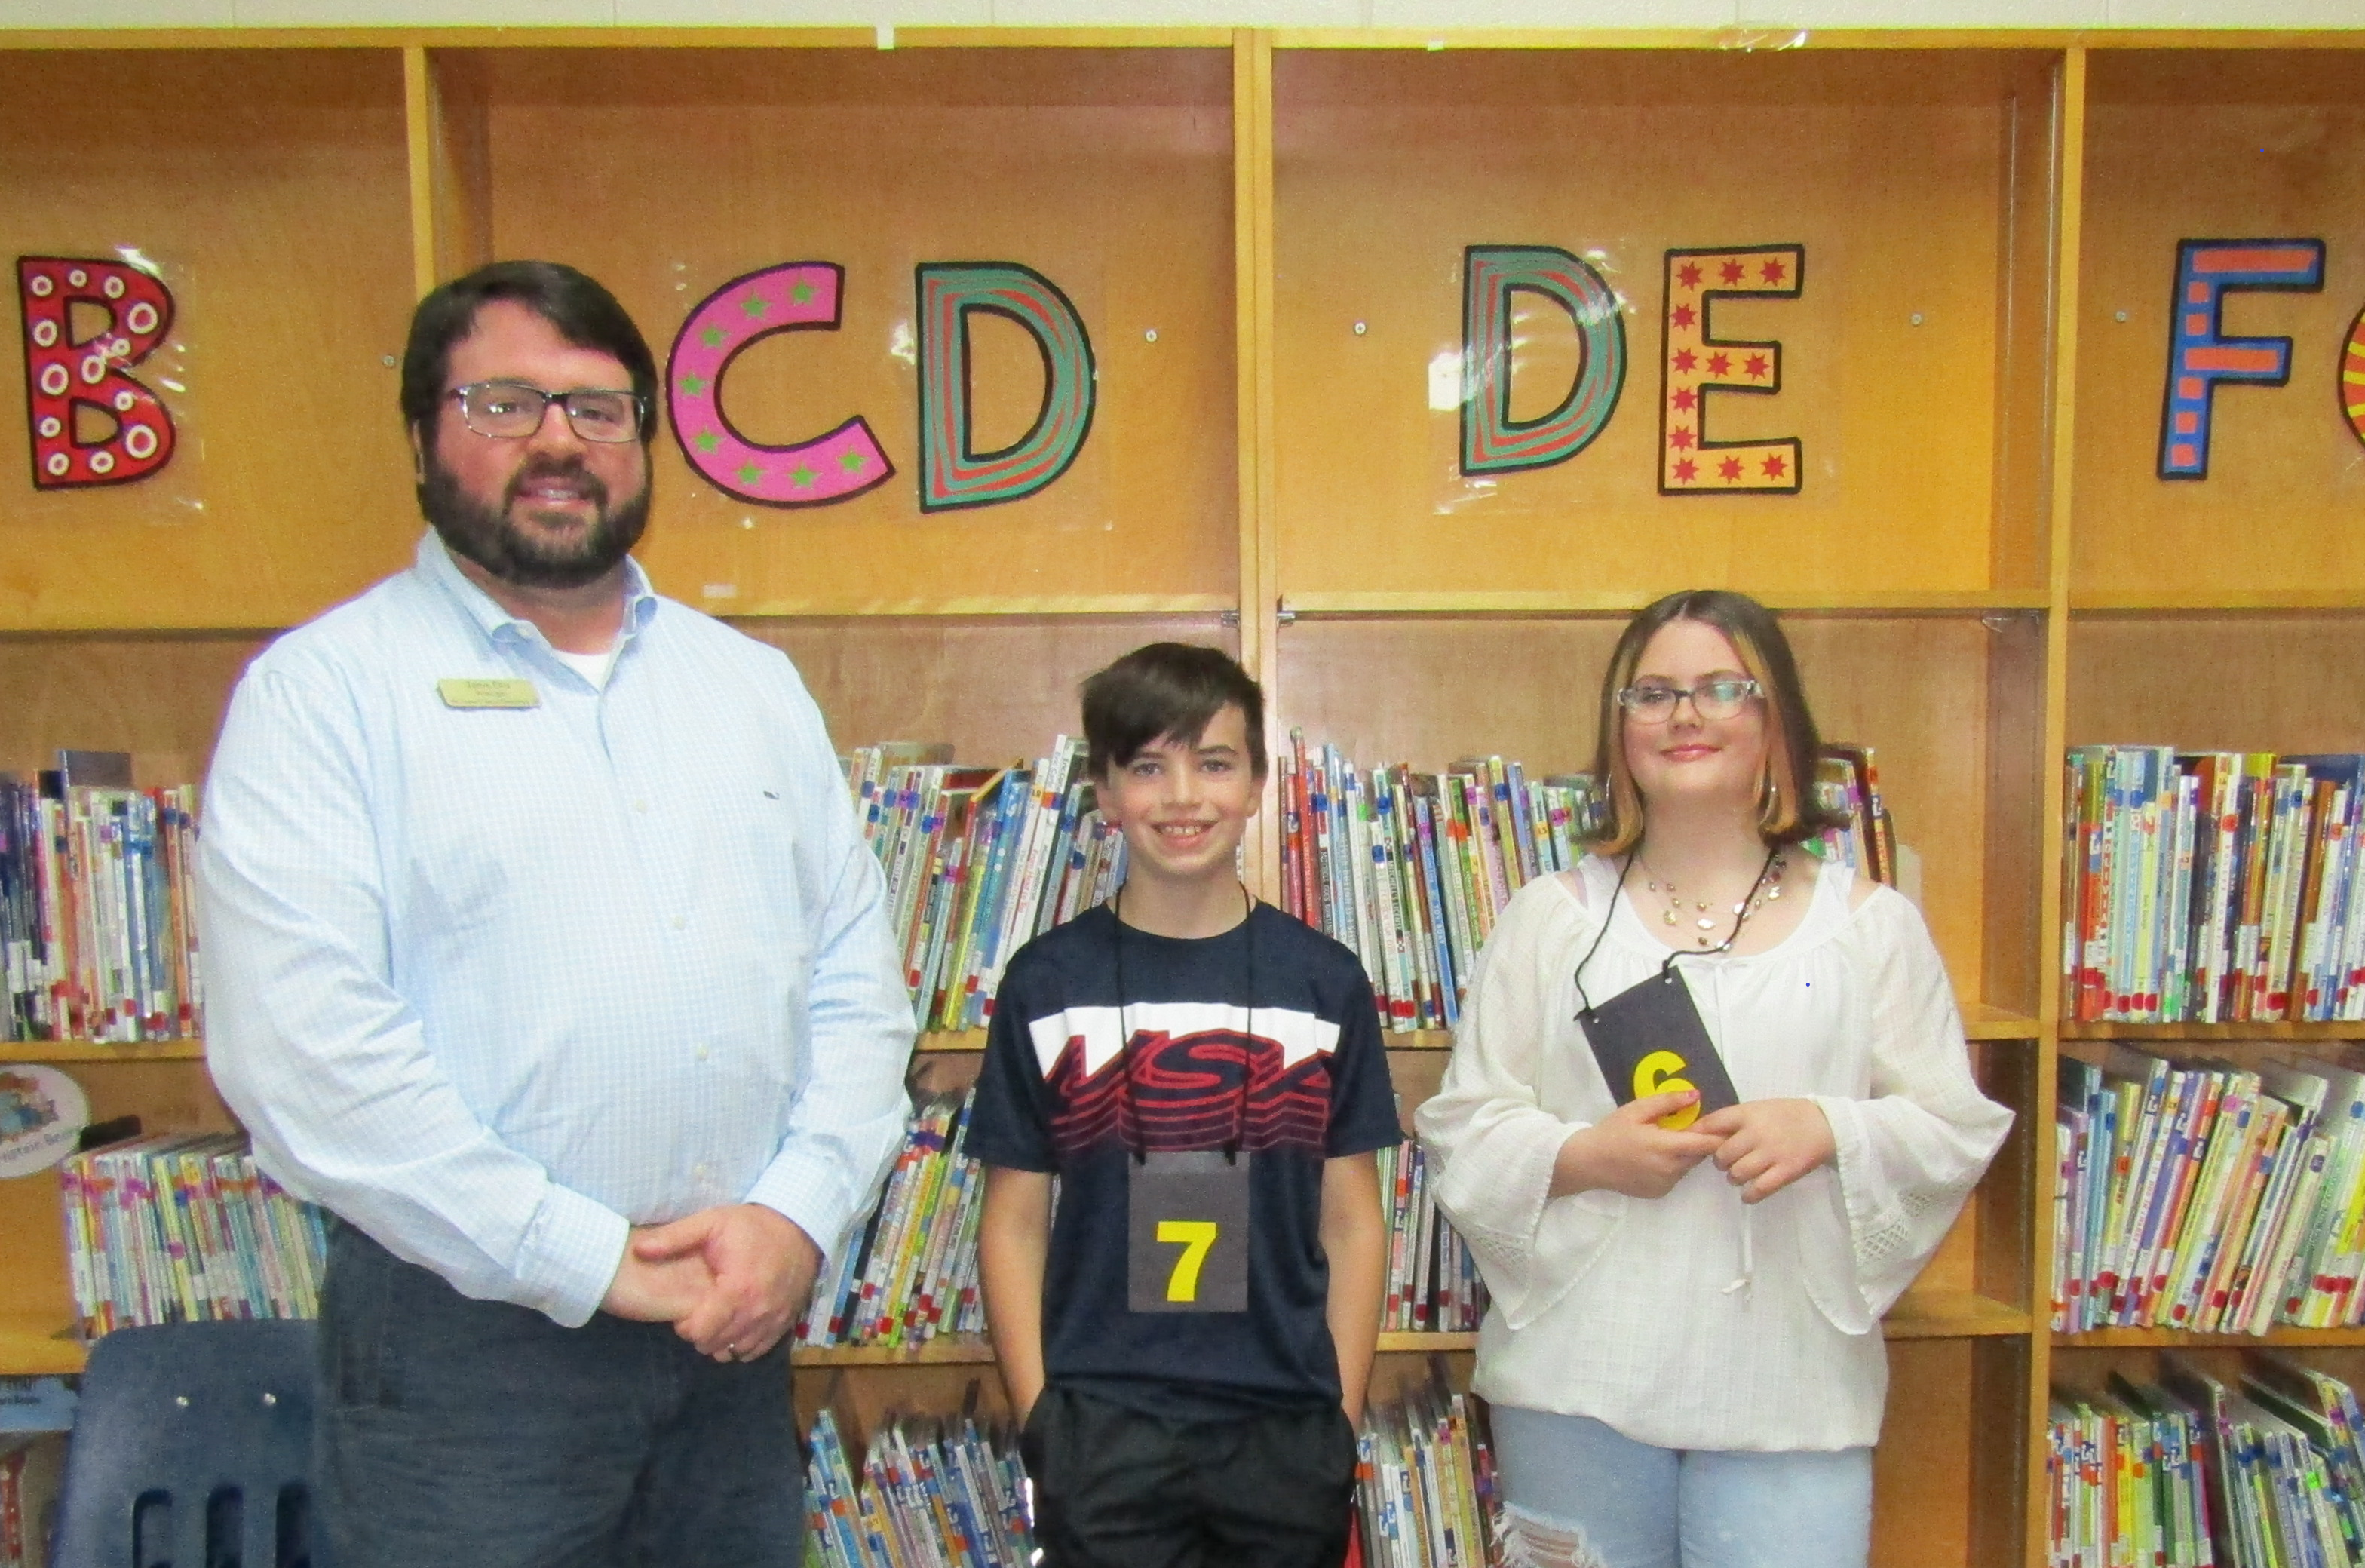 Mr. Ellis, Gavin Duke, Spelling Bee Runner Up, and Rylee Wells, Spelling Bee Winner